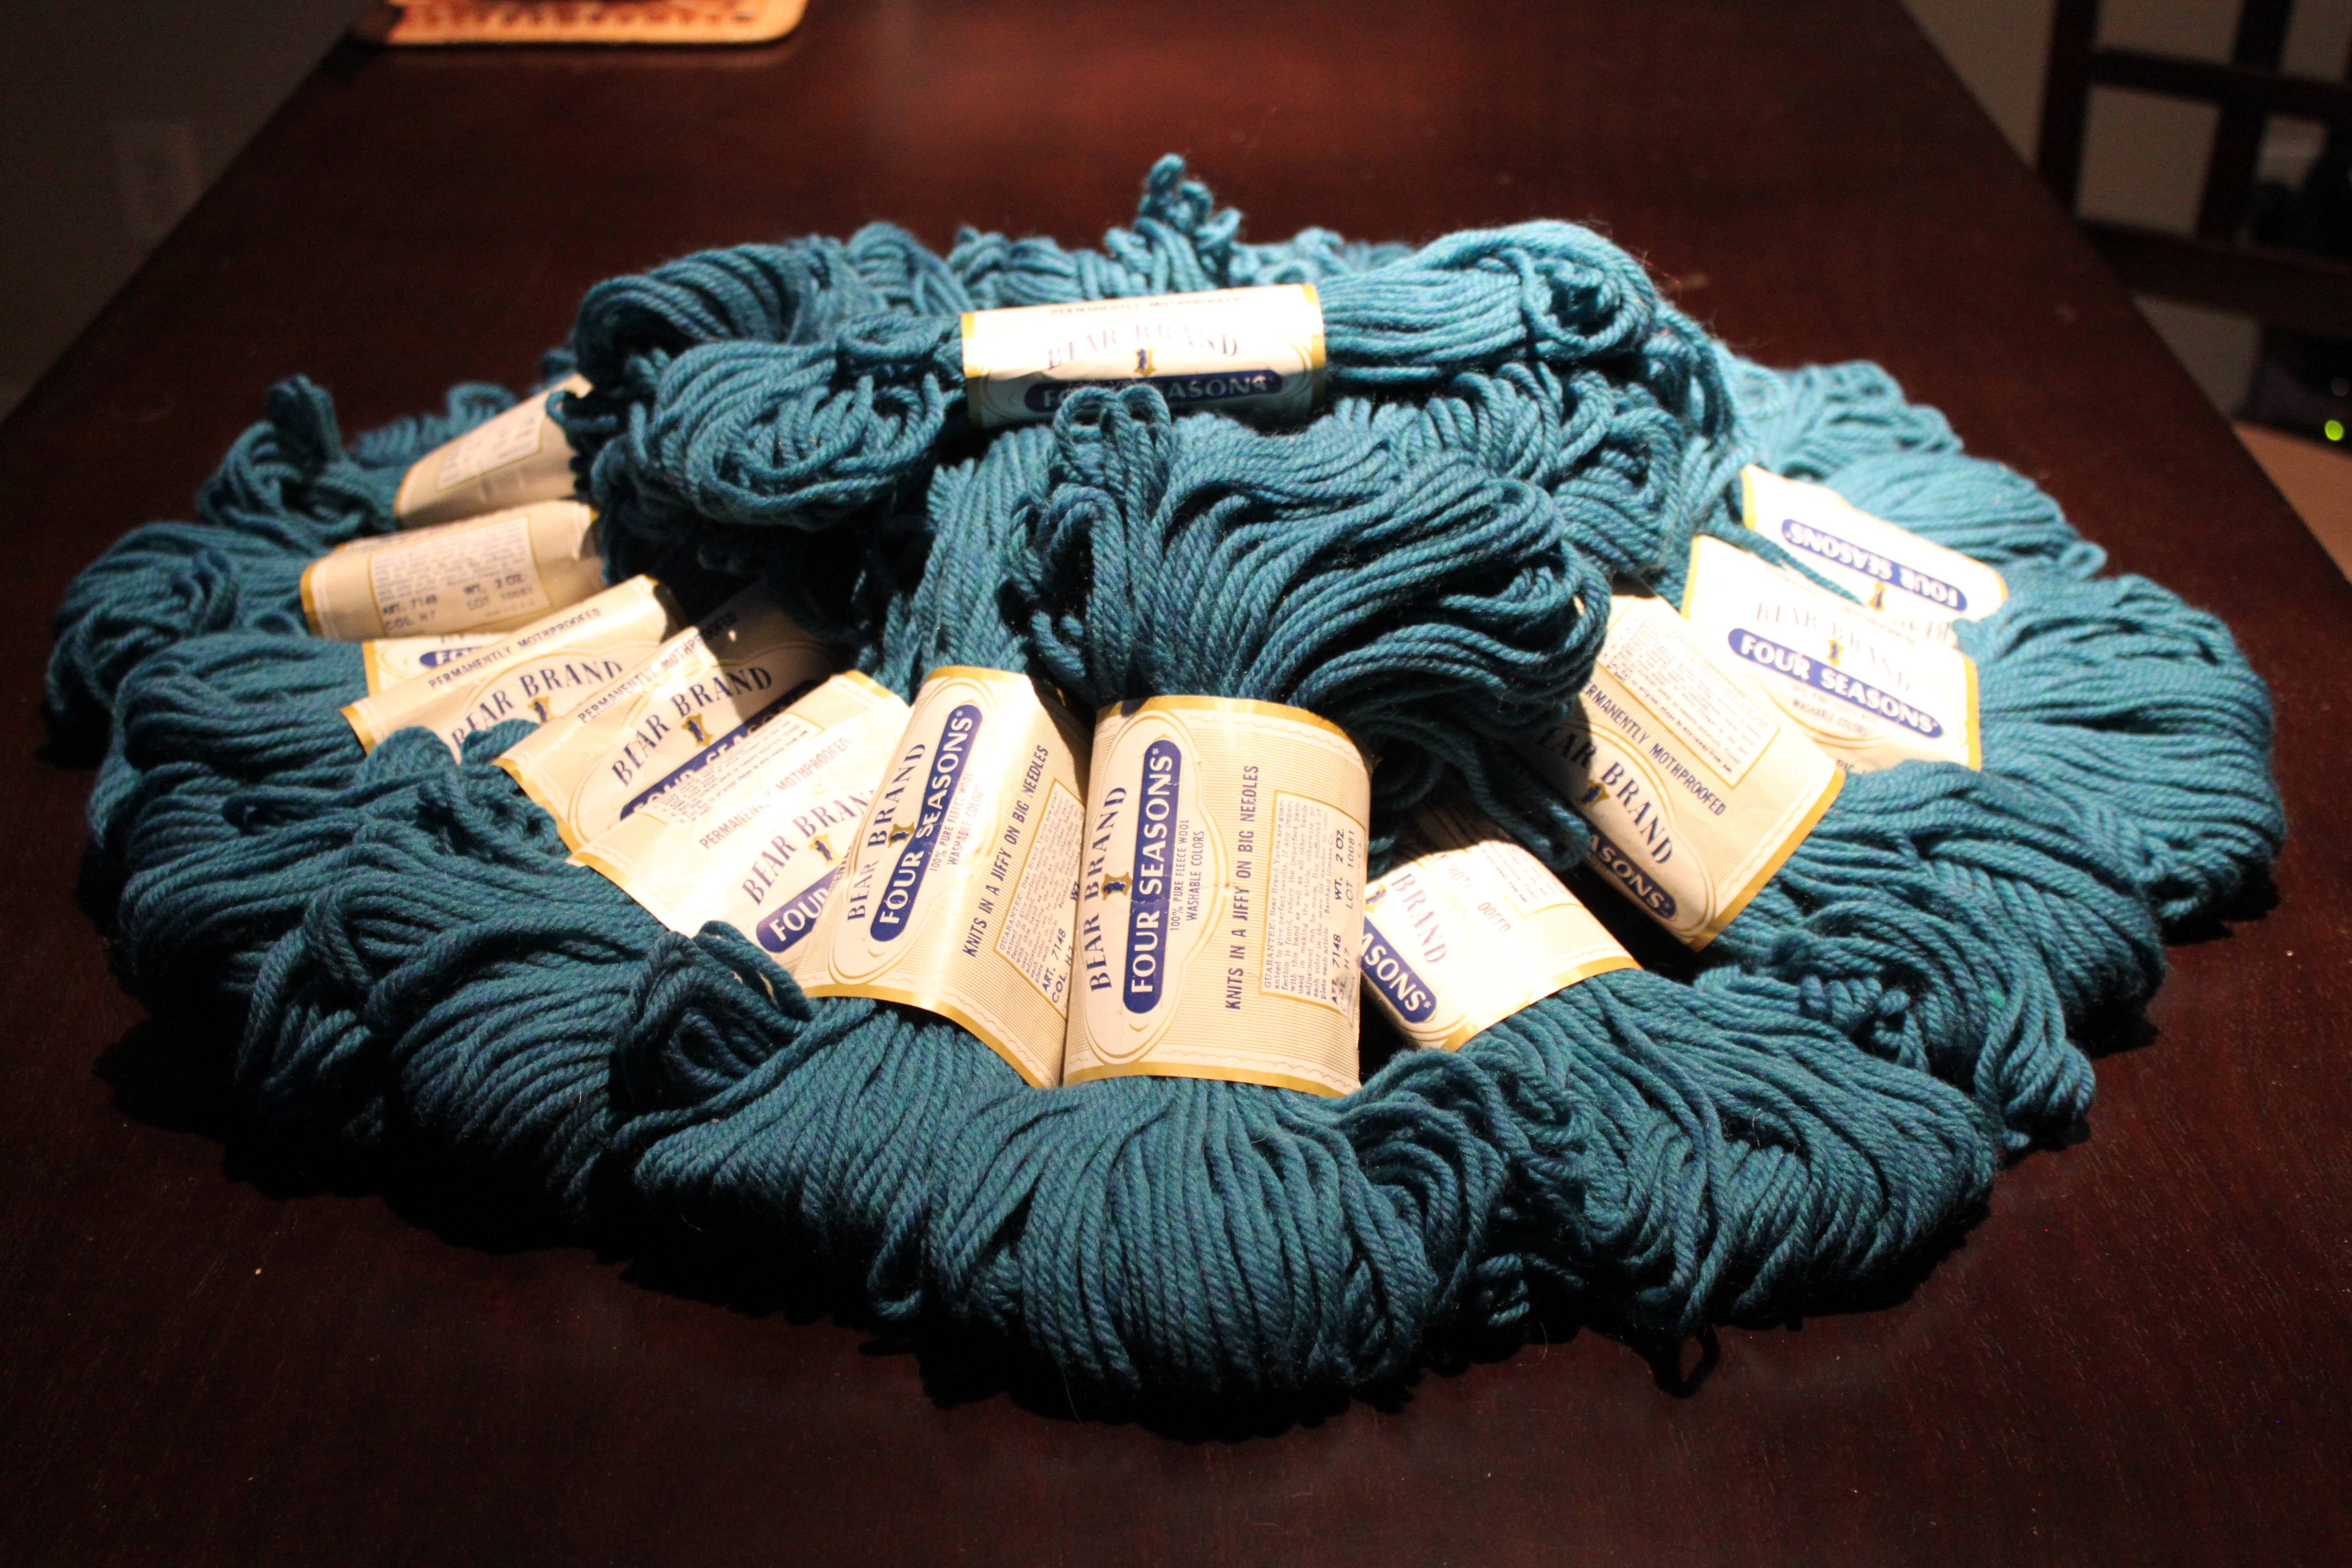 Royal Villa Original Knitting Yarn Wool-2 Ply- Sea Green Woolen